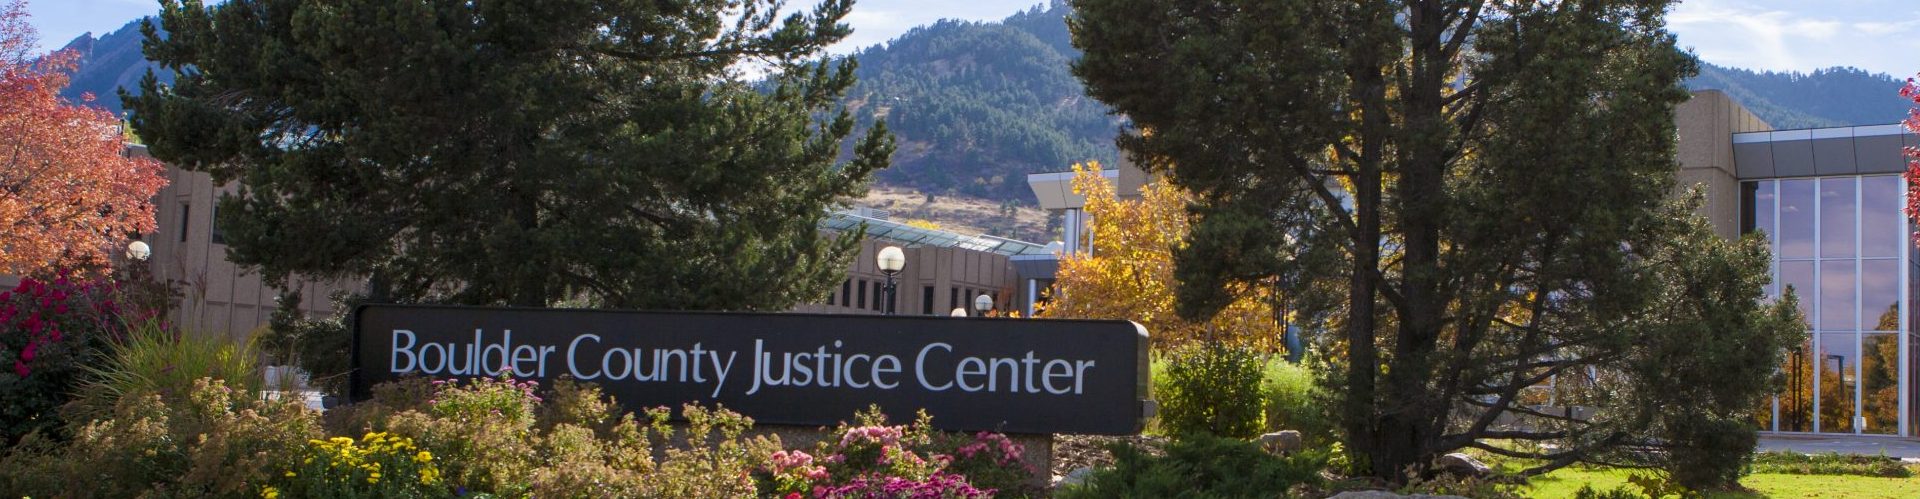 Boulder County Justice Center Building